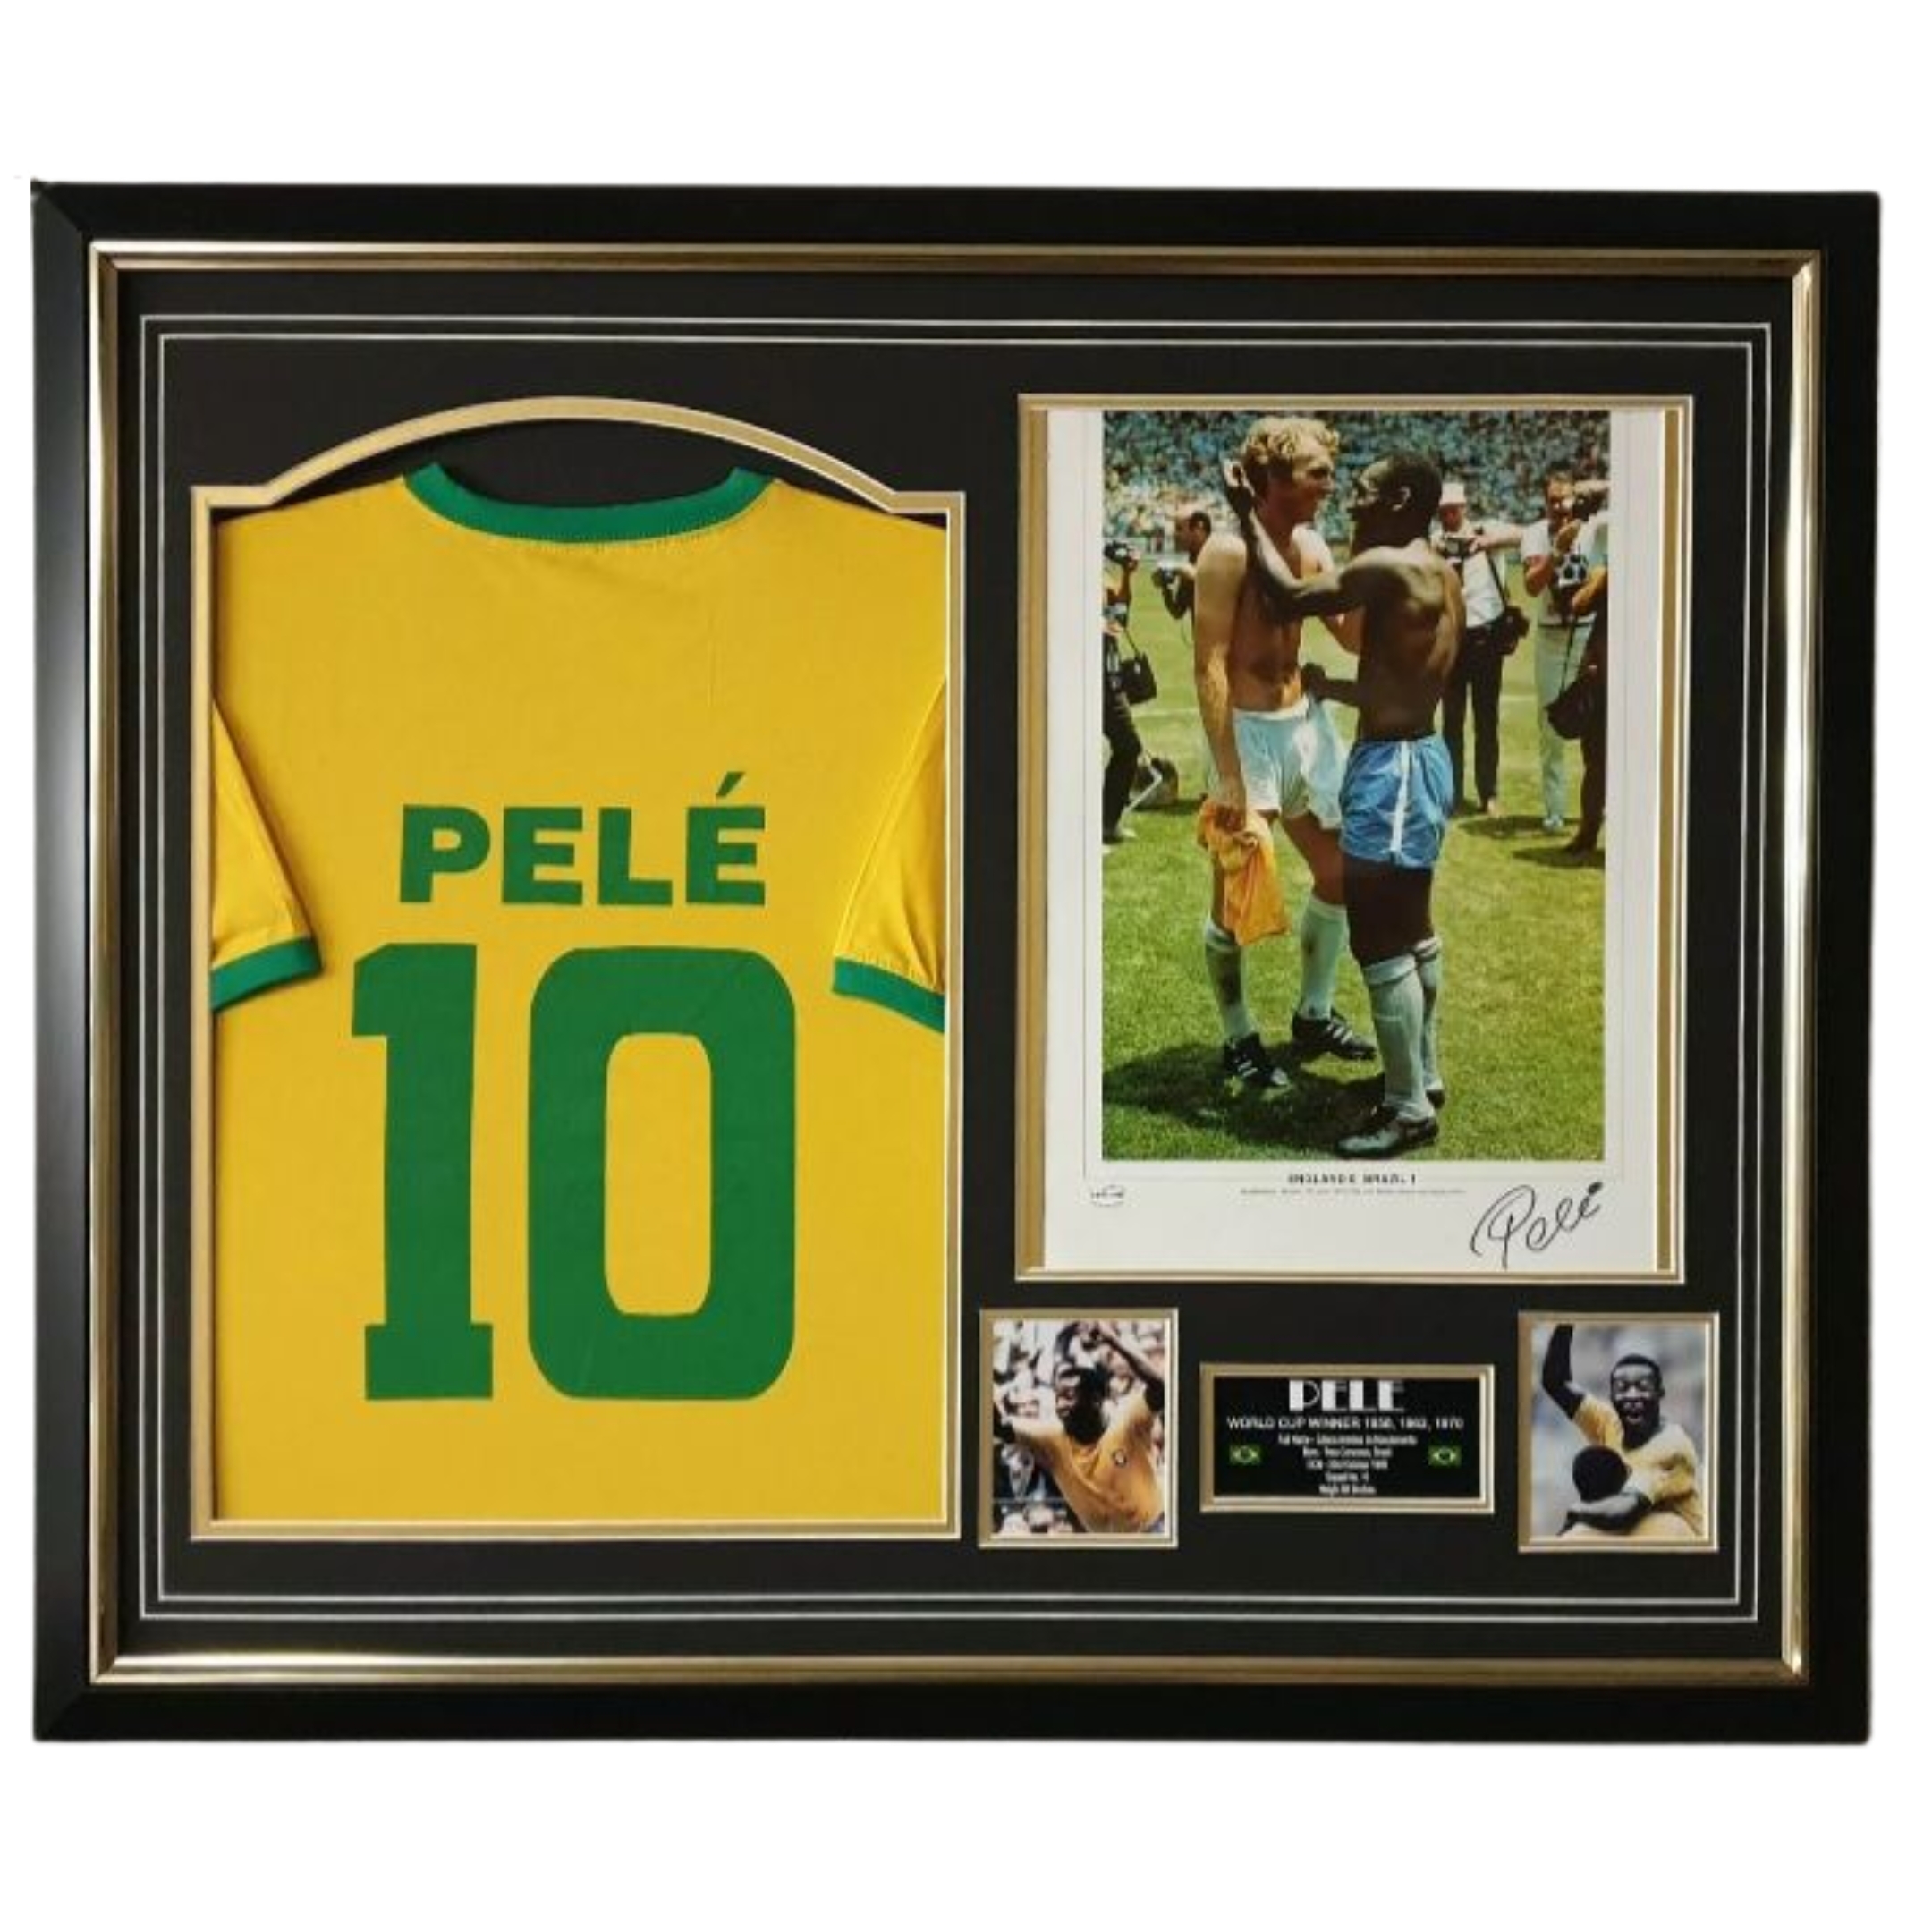 295 Pele signed photo with shirt BRAZIL